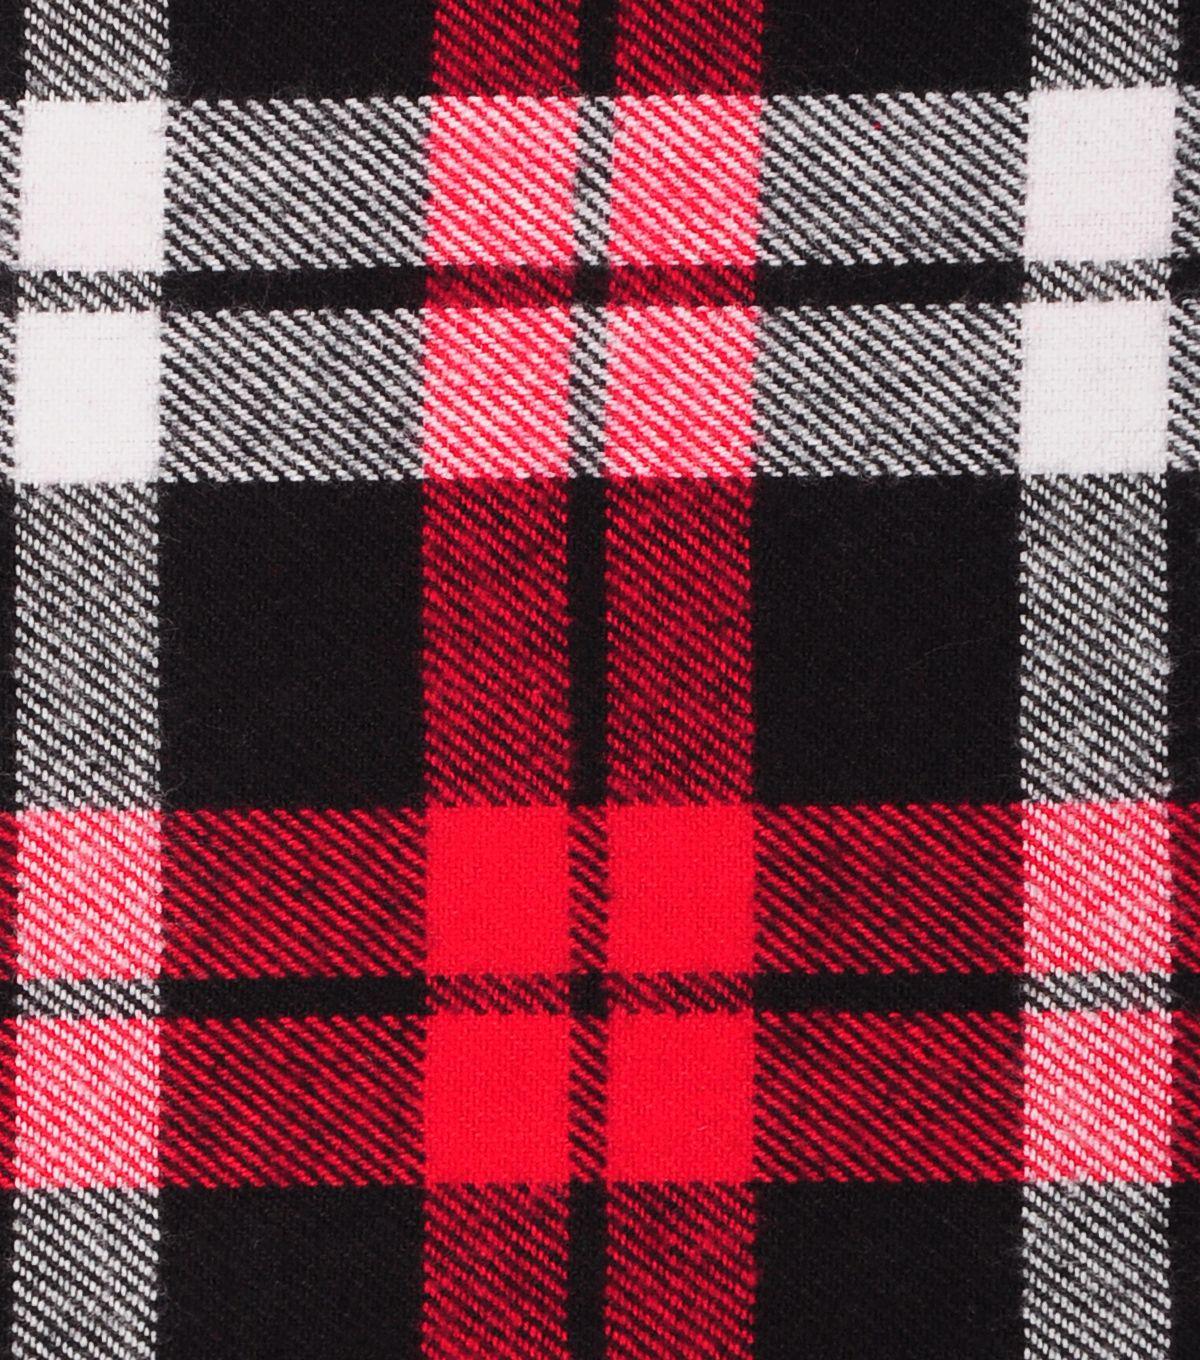 Red White Square Logo - Plaiditudes Brushed Cotton Fabric-Red, White & Black Square Plaid ...